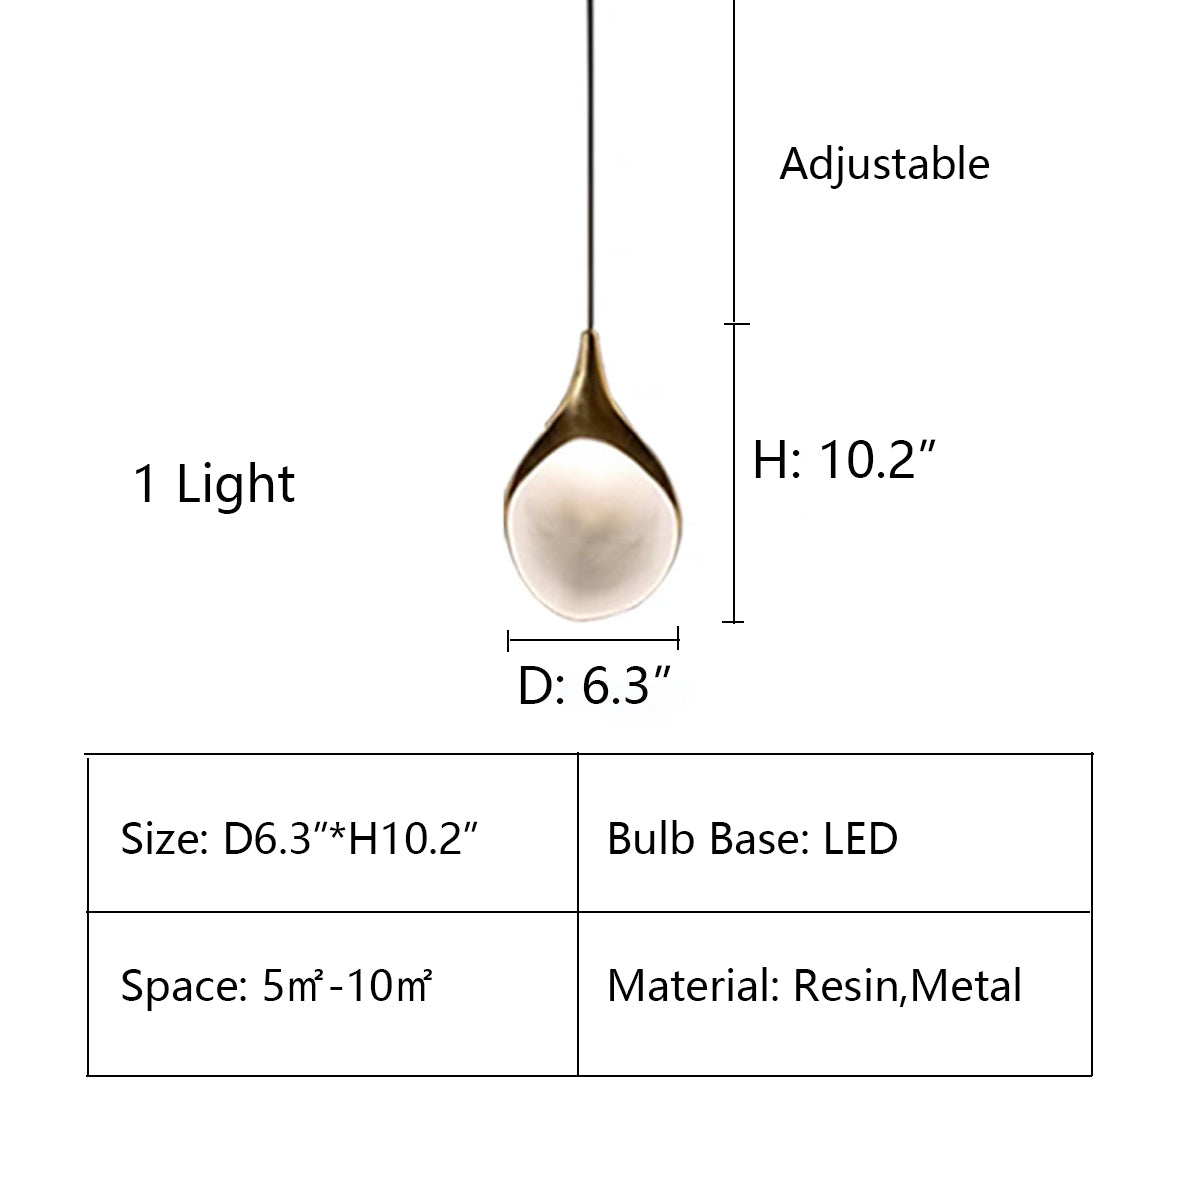 1 Light: D6.3"*H10.2" chandelier,chandeliers,pendant,resin,metal,gold,nordic,modern,multiple,living room,dining room,long chandelier,foyer,stairs,entrys,hallway,light luxuruy,chain,adjustable